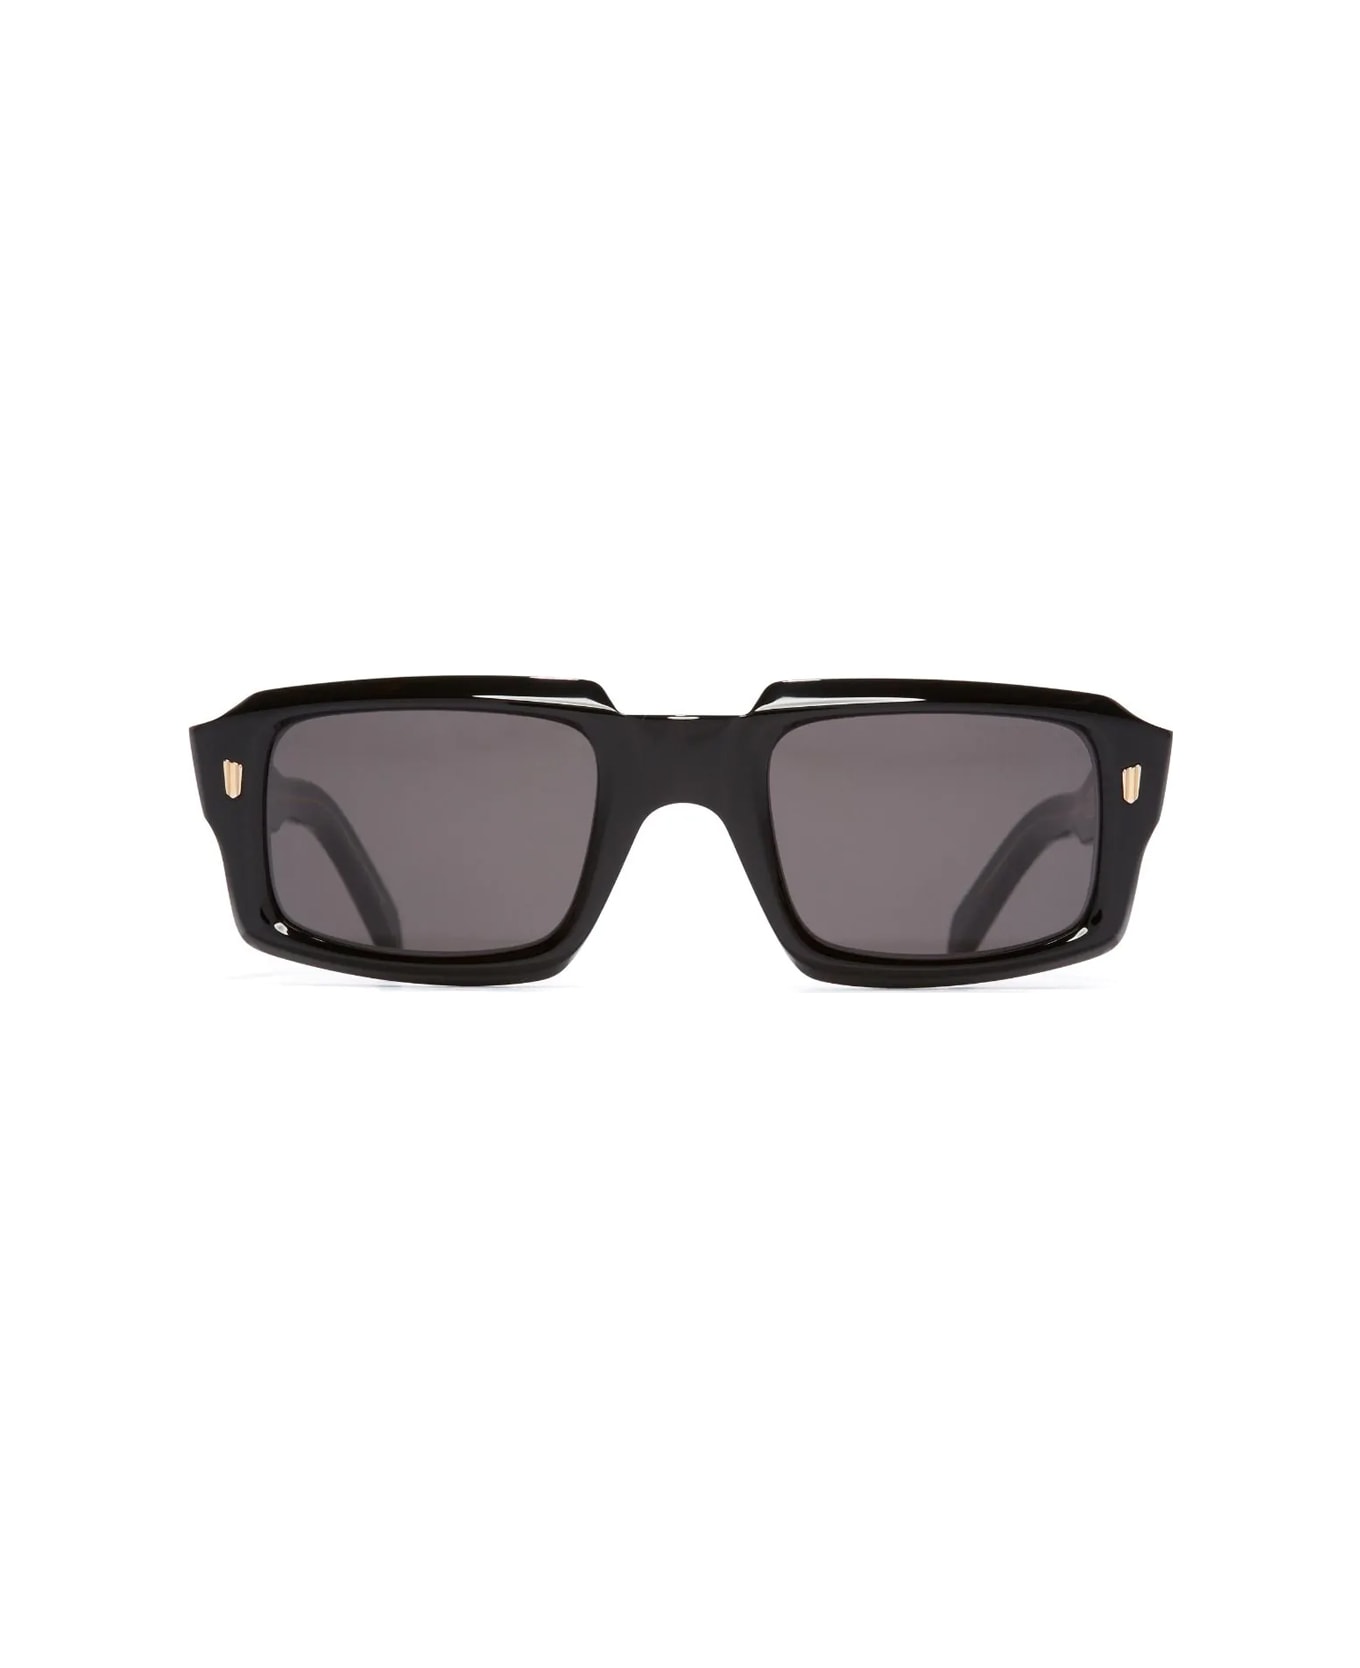 Cutler and Gross 9495 01 Black Sunglasses - Nero